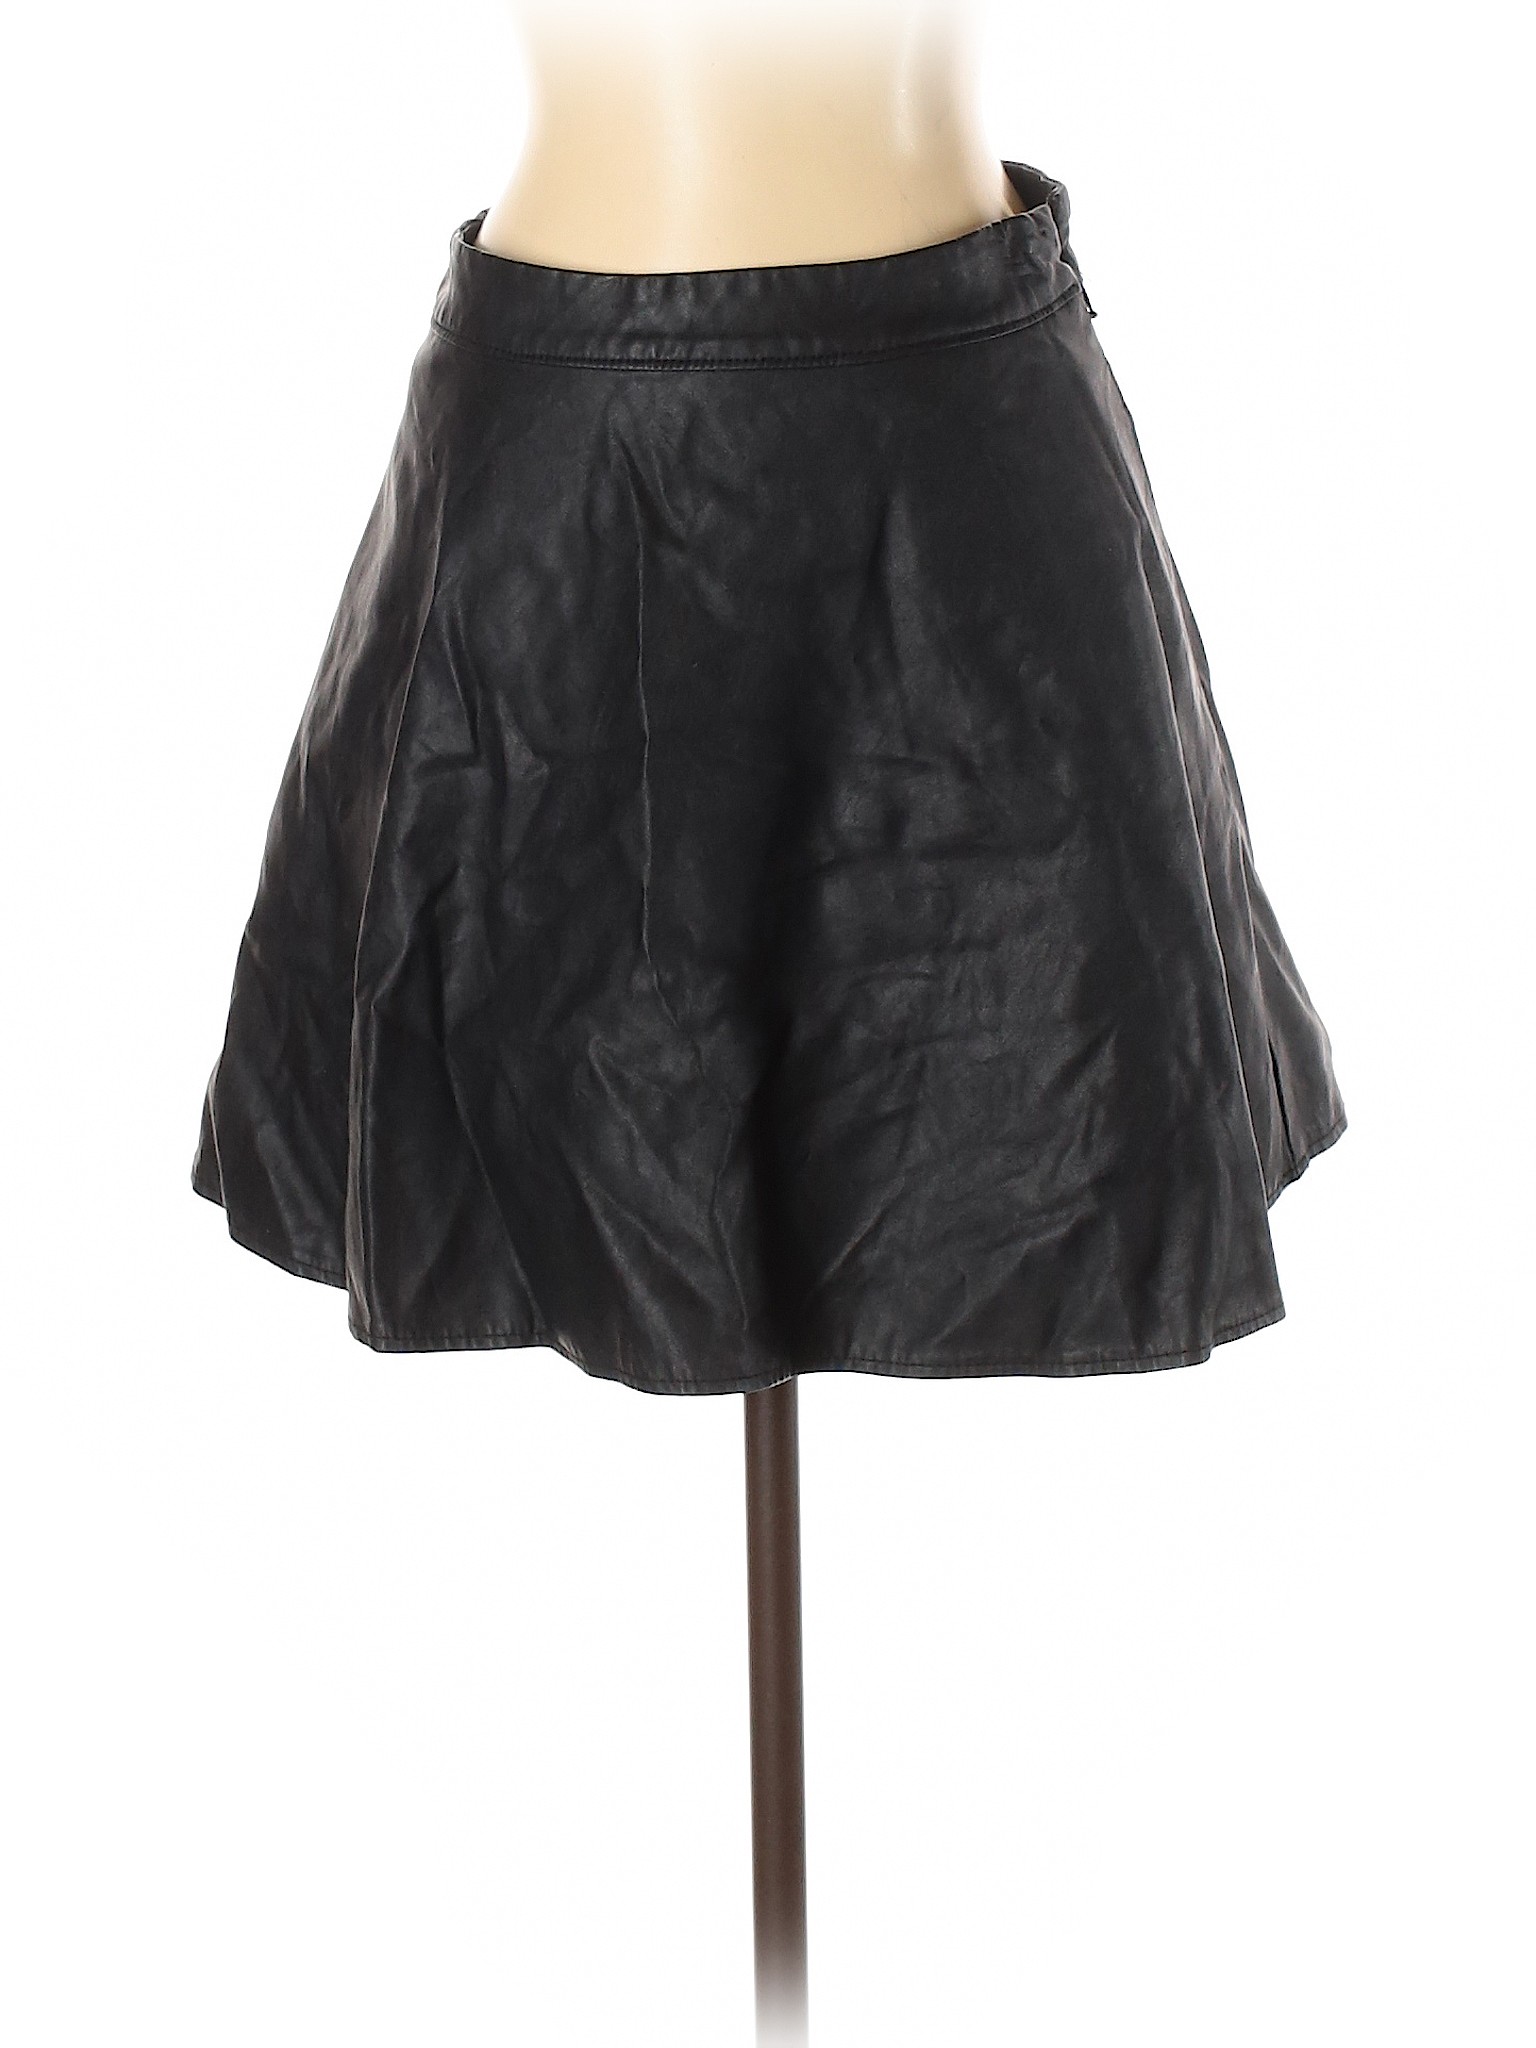 Abercrombie & Fitch Women Black Faux Leather Skirt S | eBay